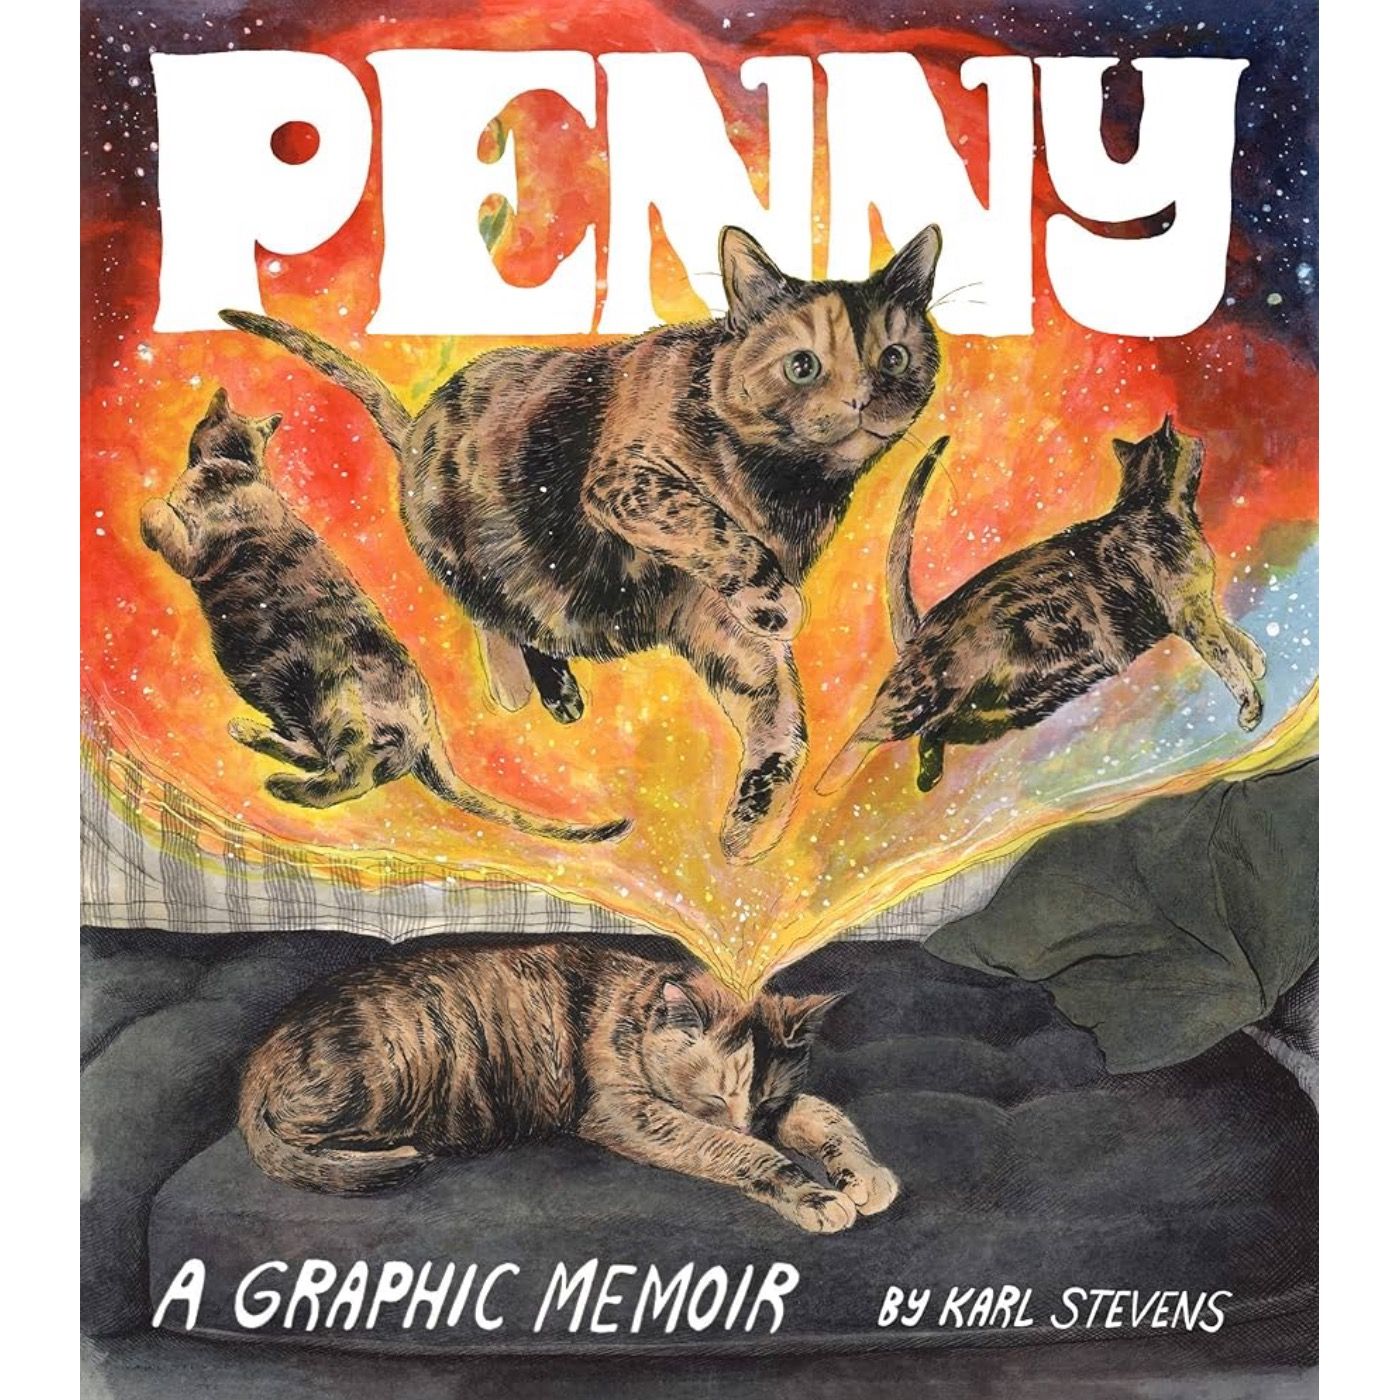 Karl Stevens - Author of graphic novel 'Penny' & New Yorker Cartoonist